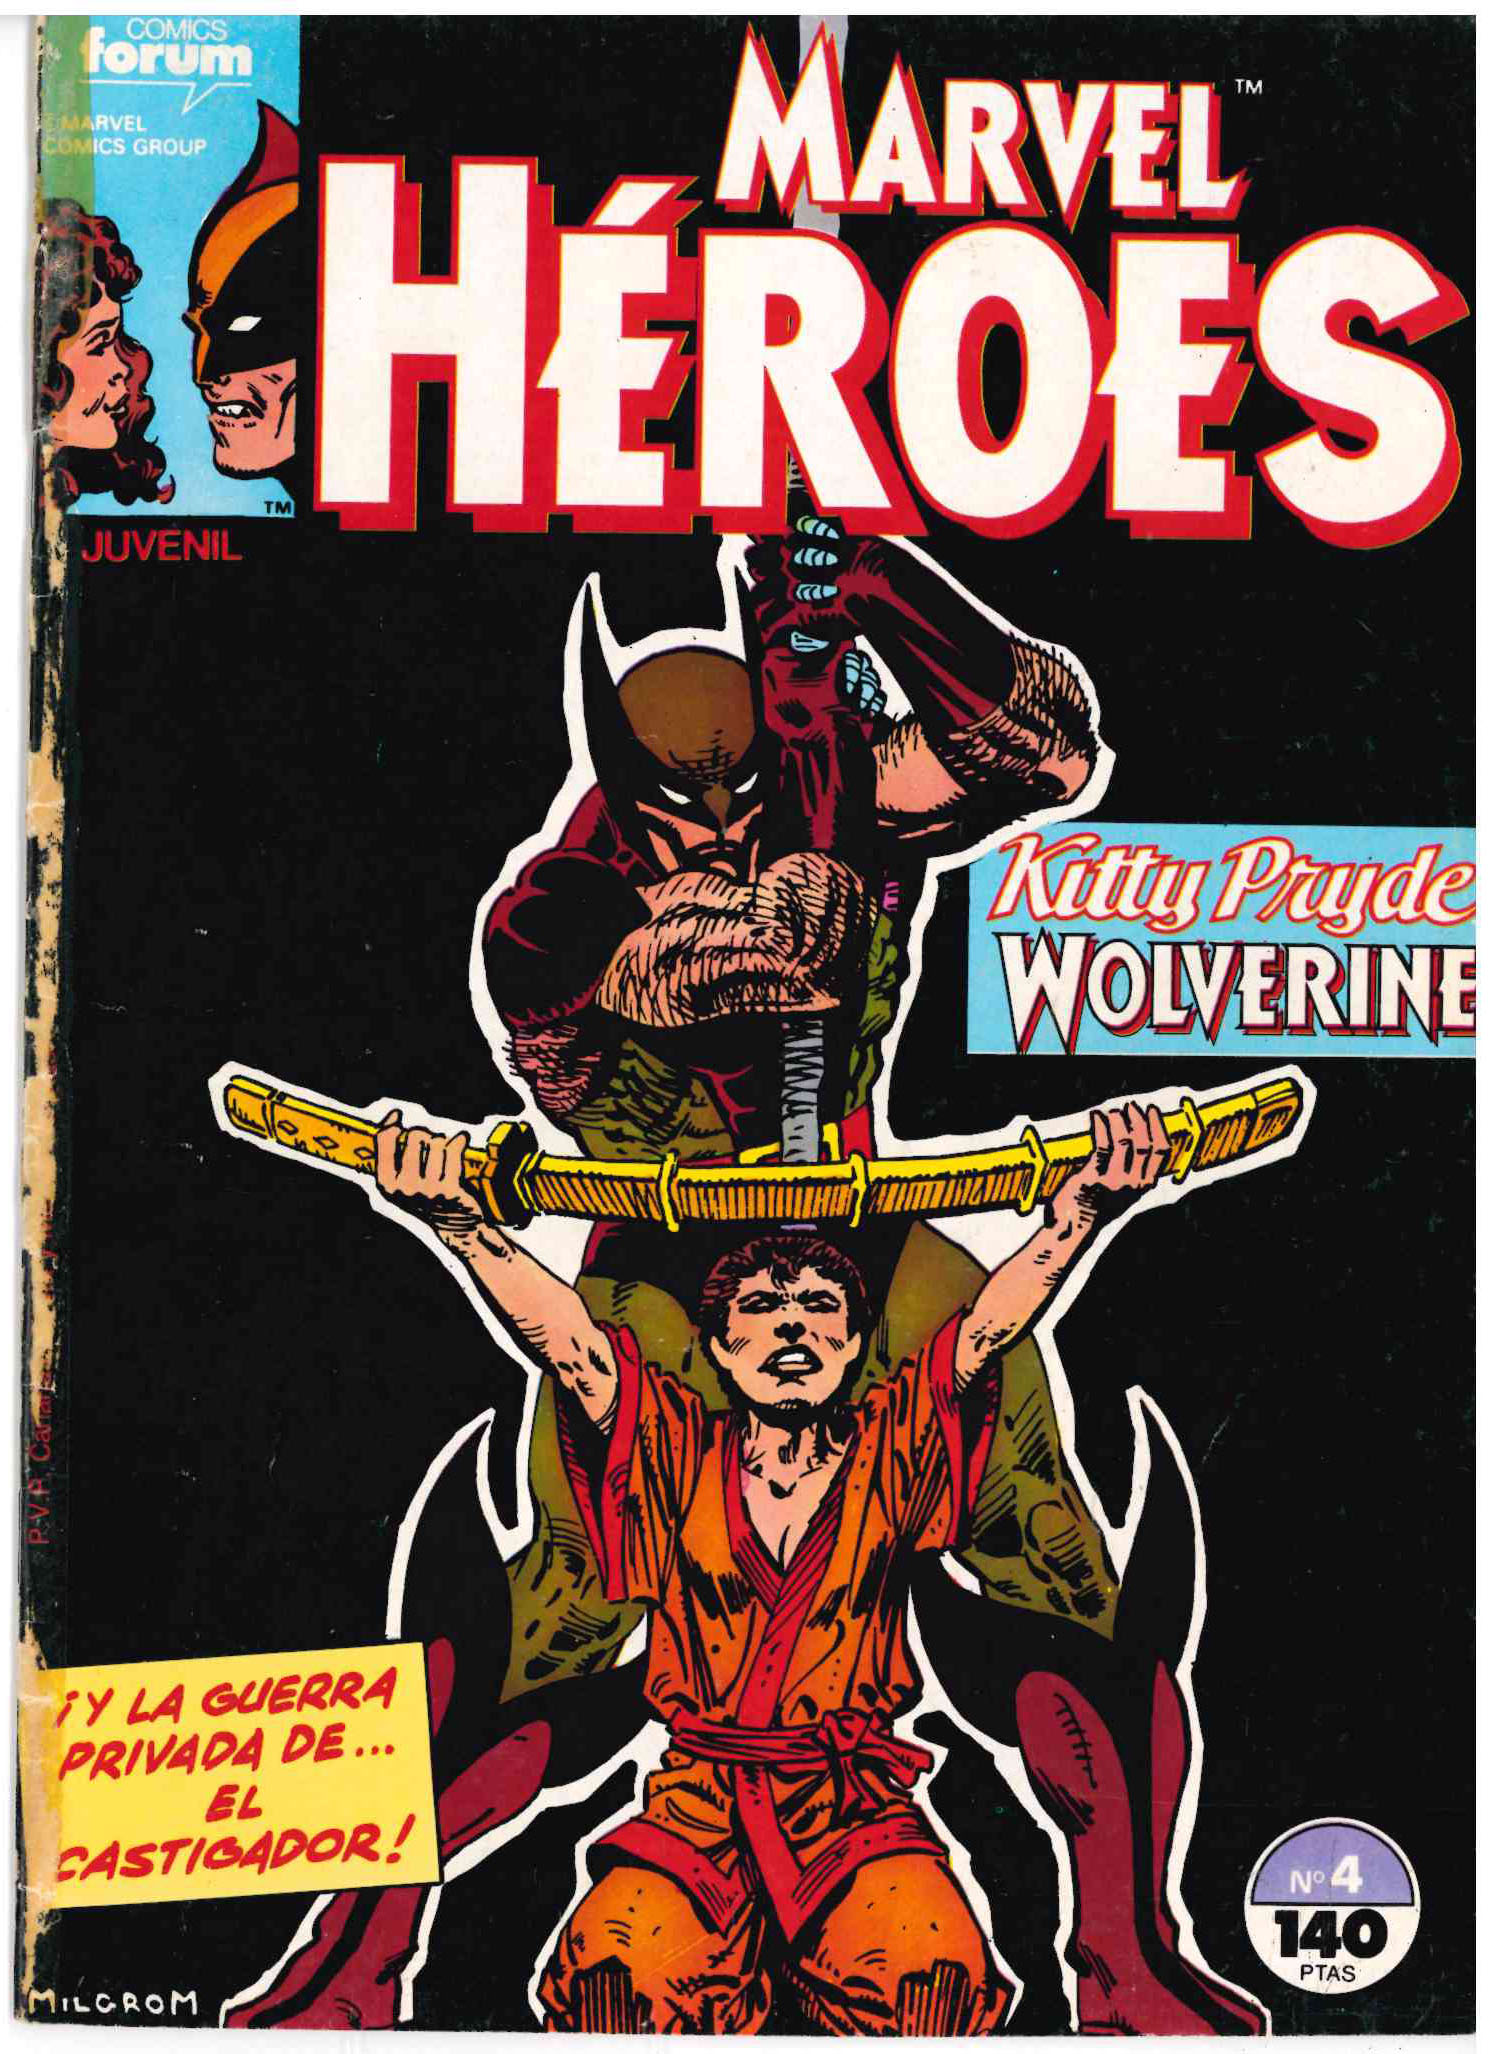 Marvel Héroes. Forum 1987. Nº 4 Kitty Pryde / Wolverine